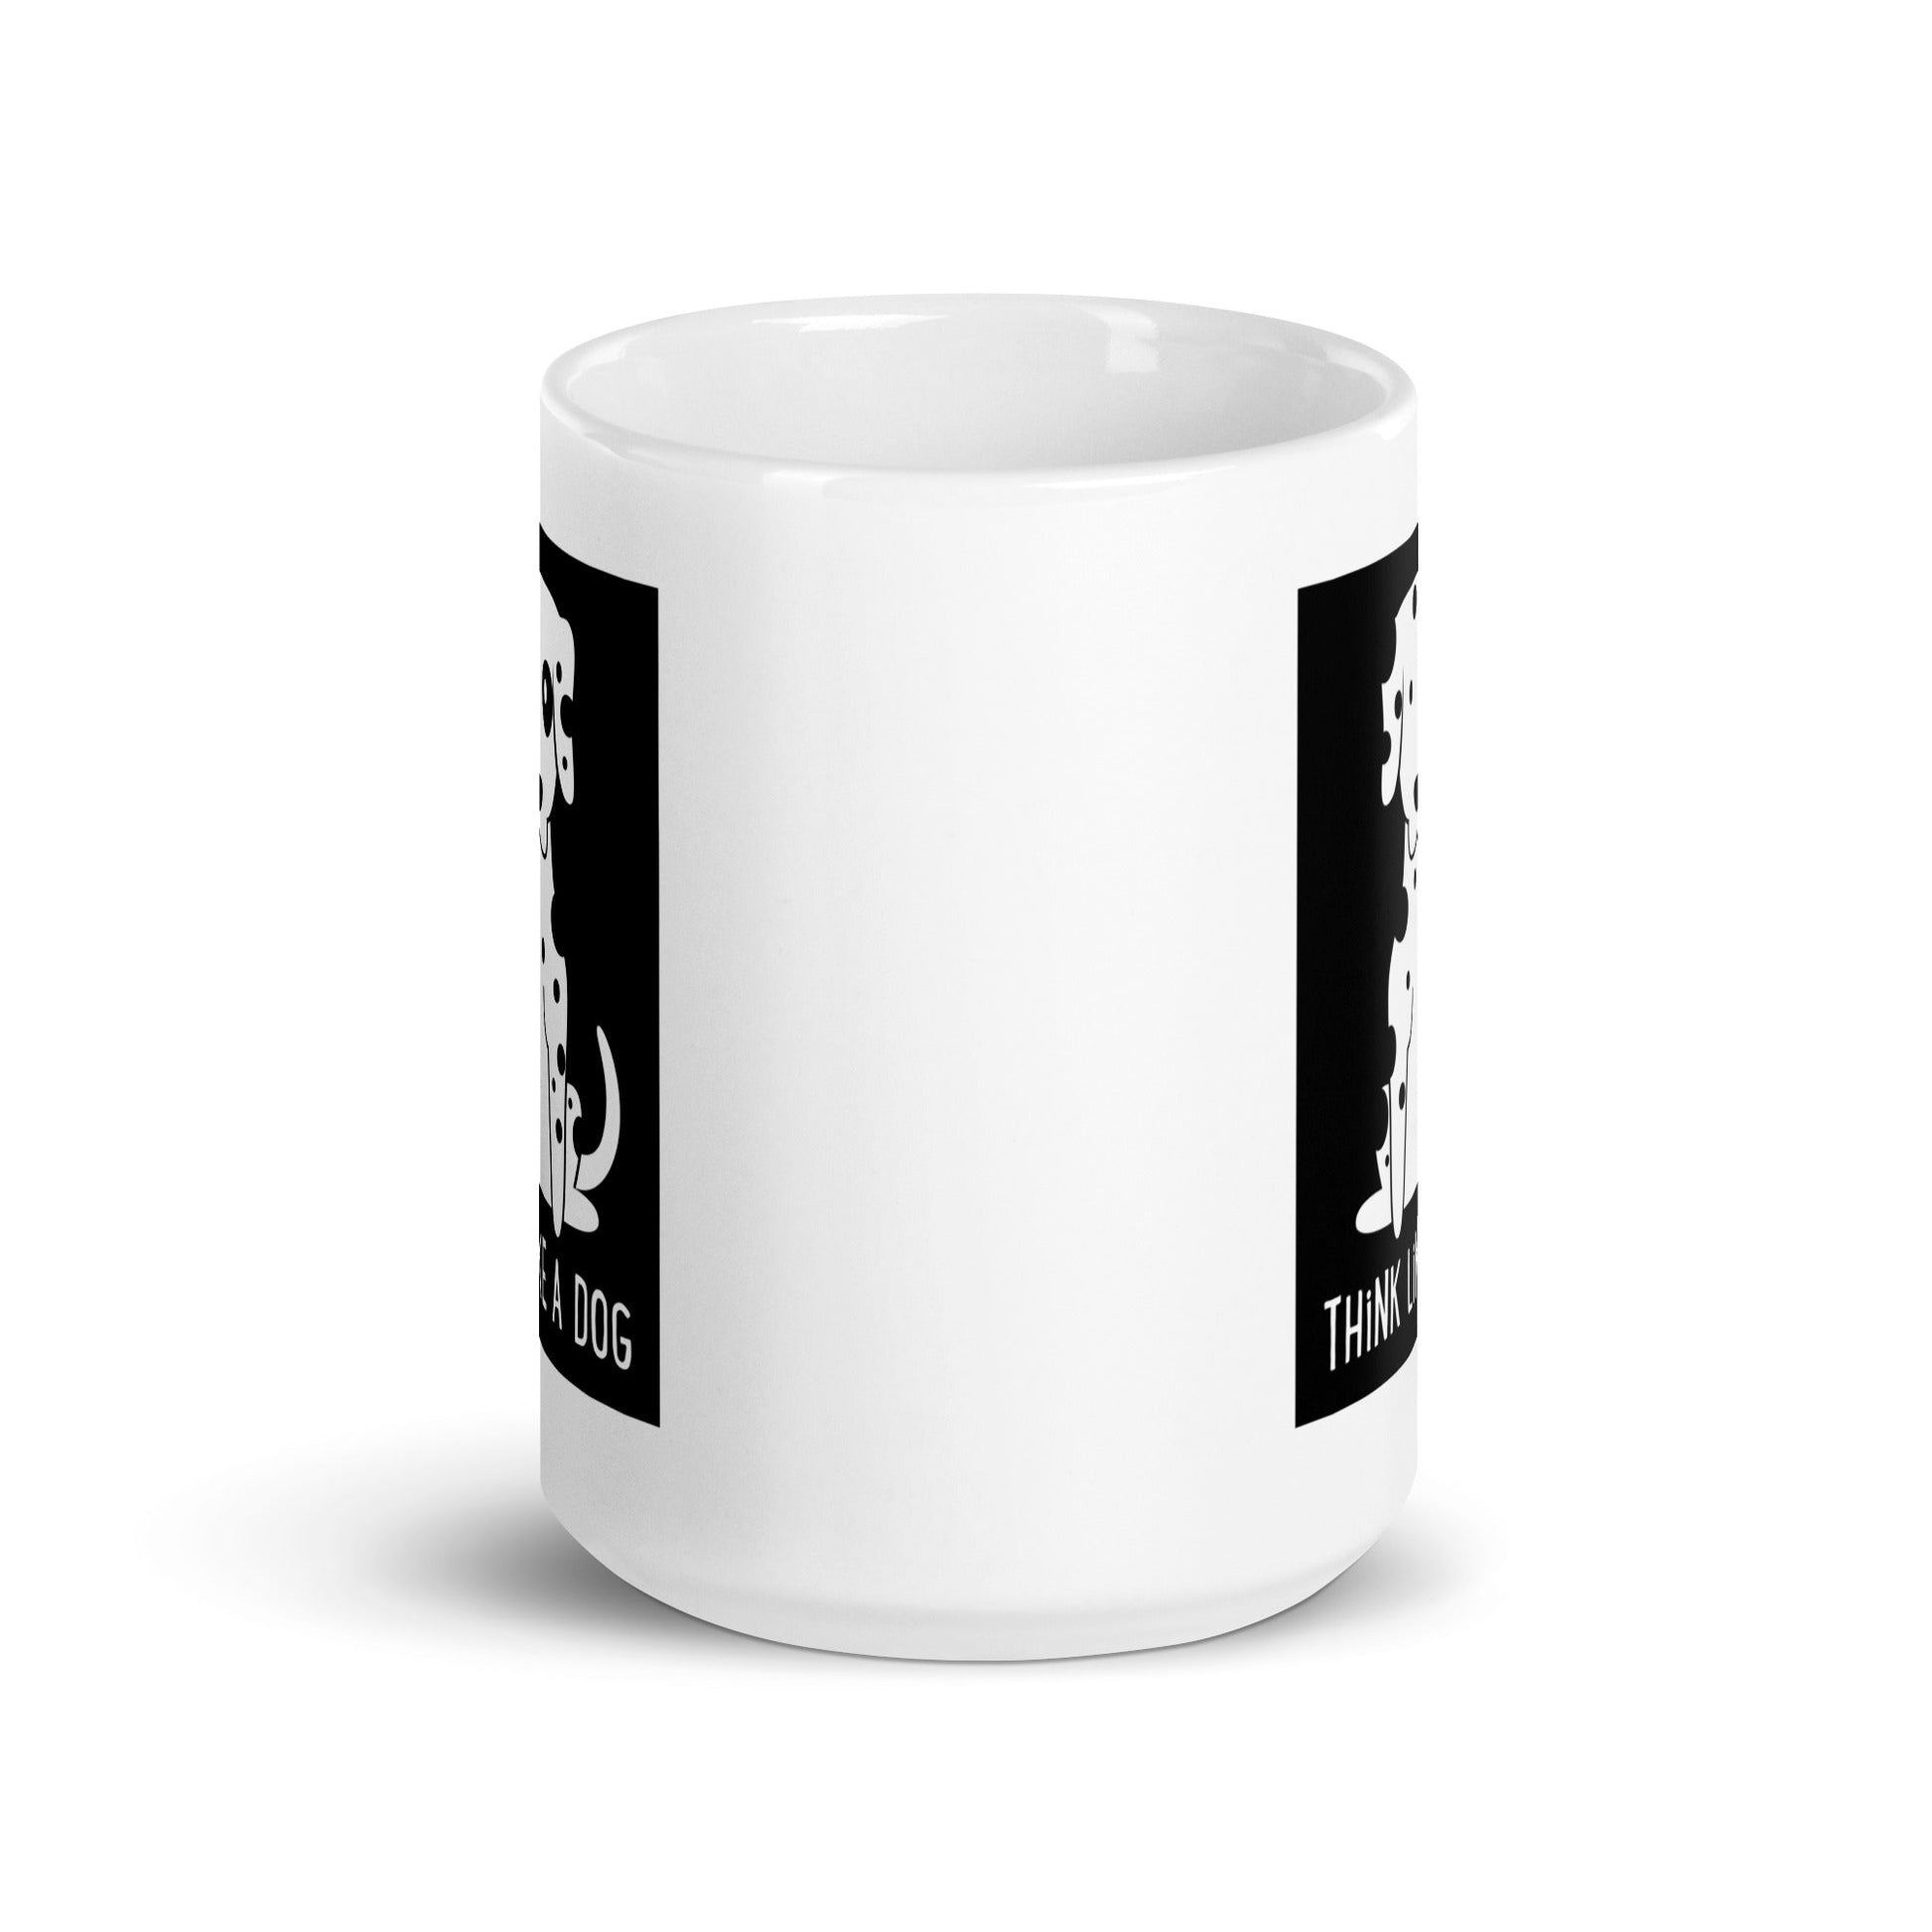 White Glossy Mug Spot Black & White with black text "THiNK LiKE A DOG®" on a white background.